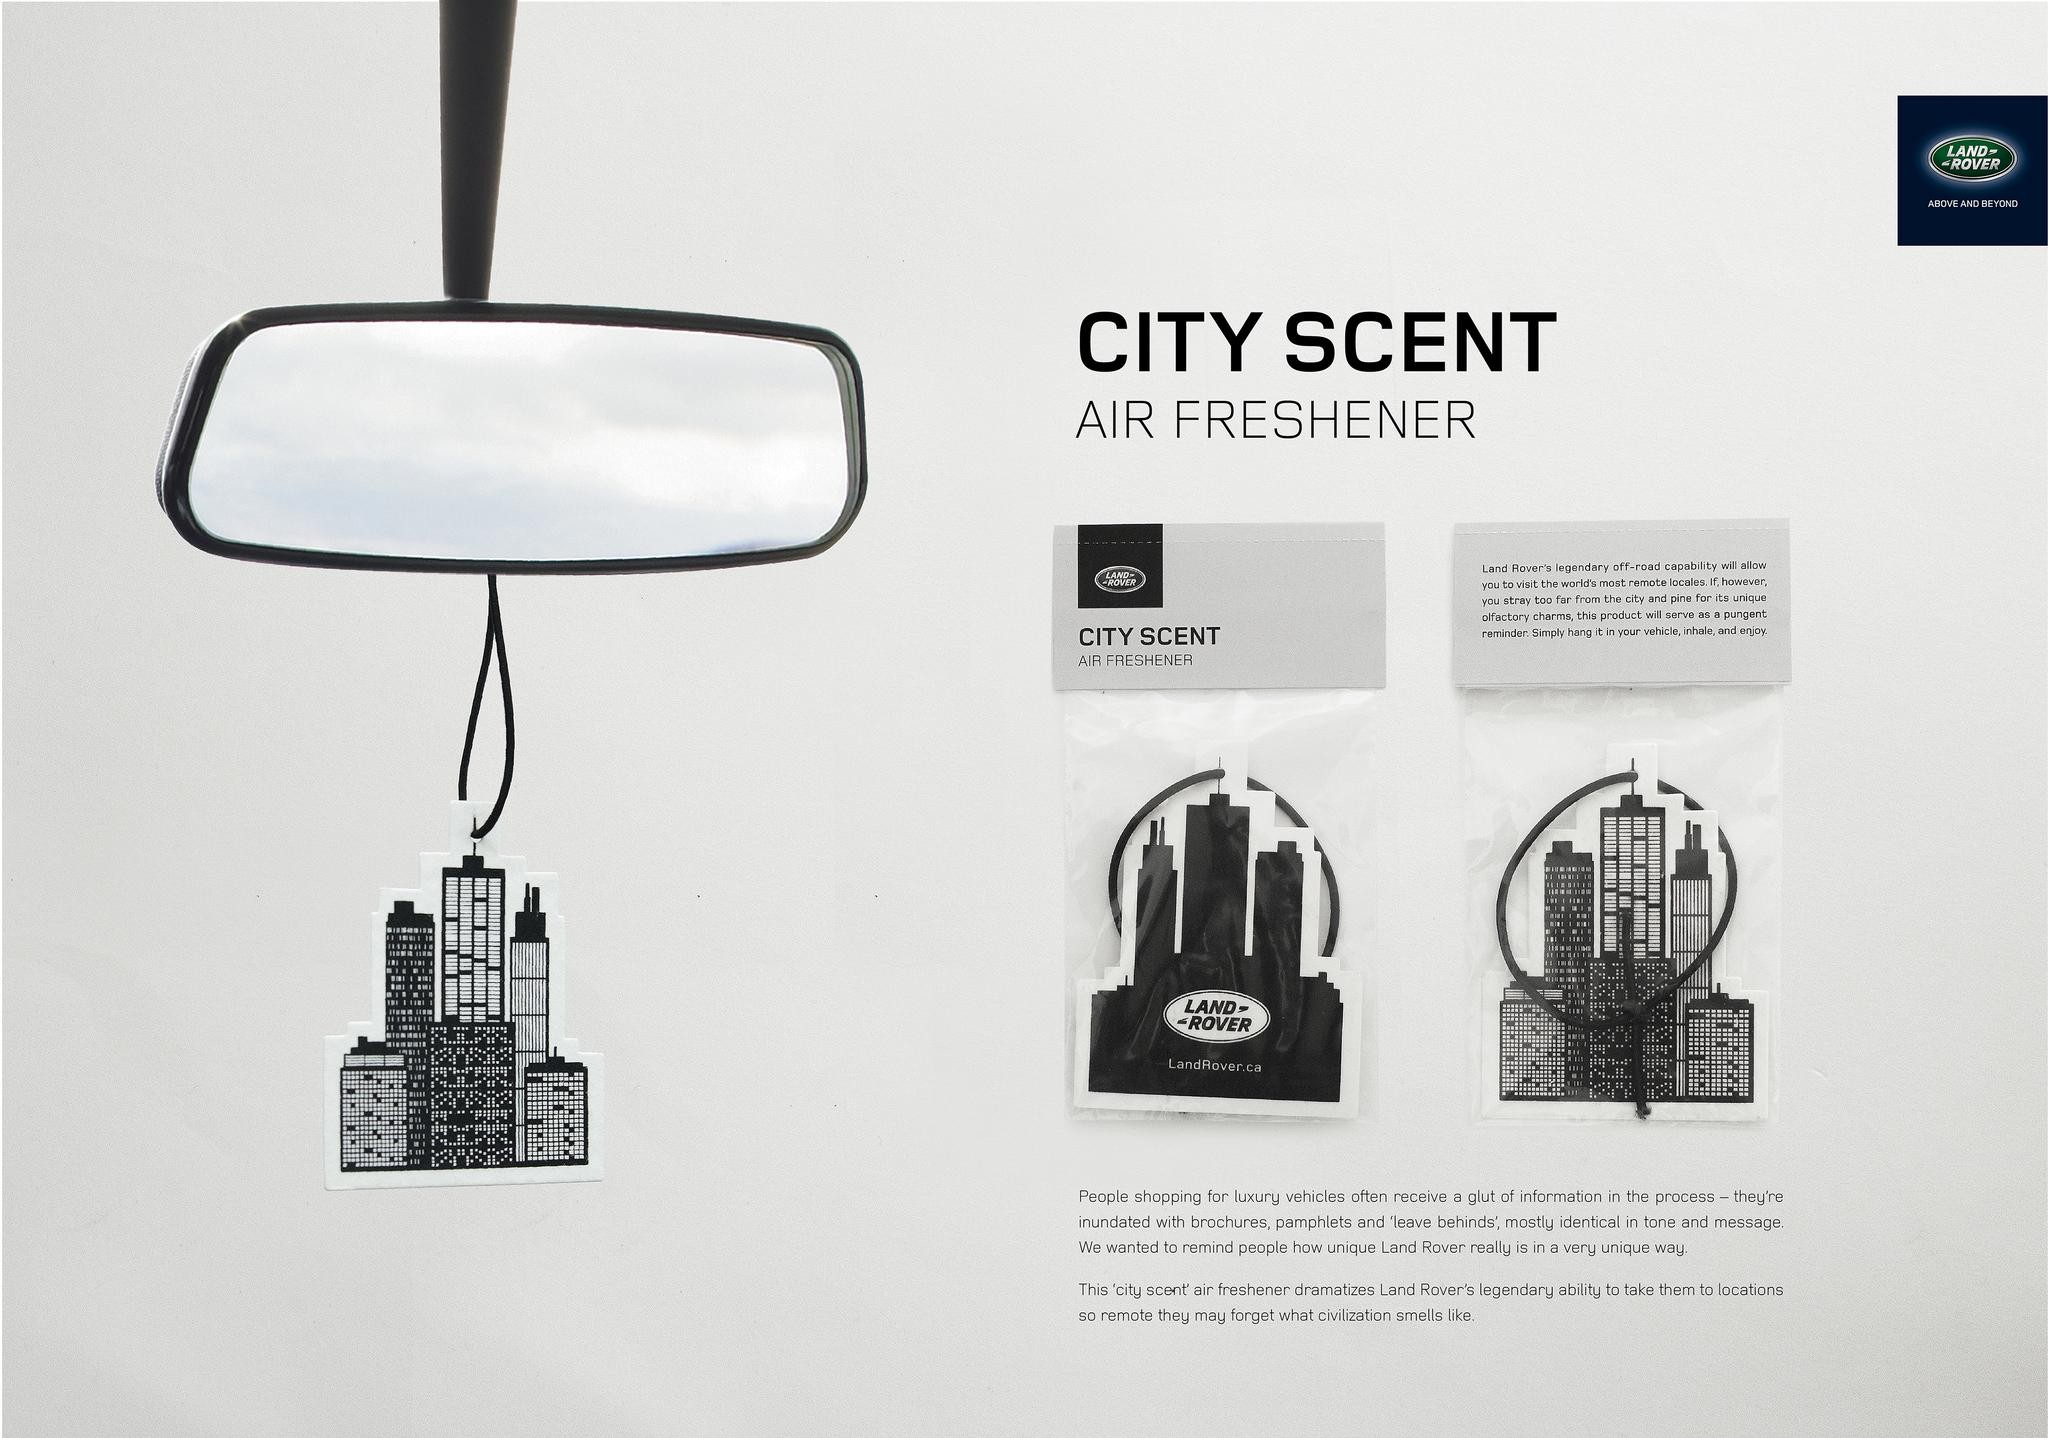 'CITY SCENT' AIR FRESHENER